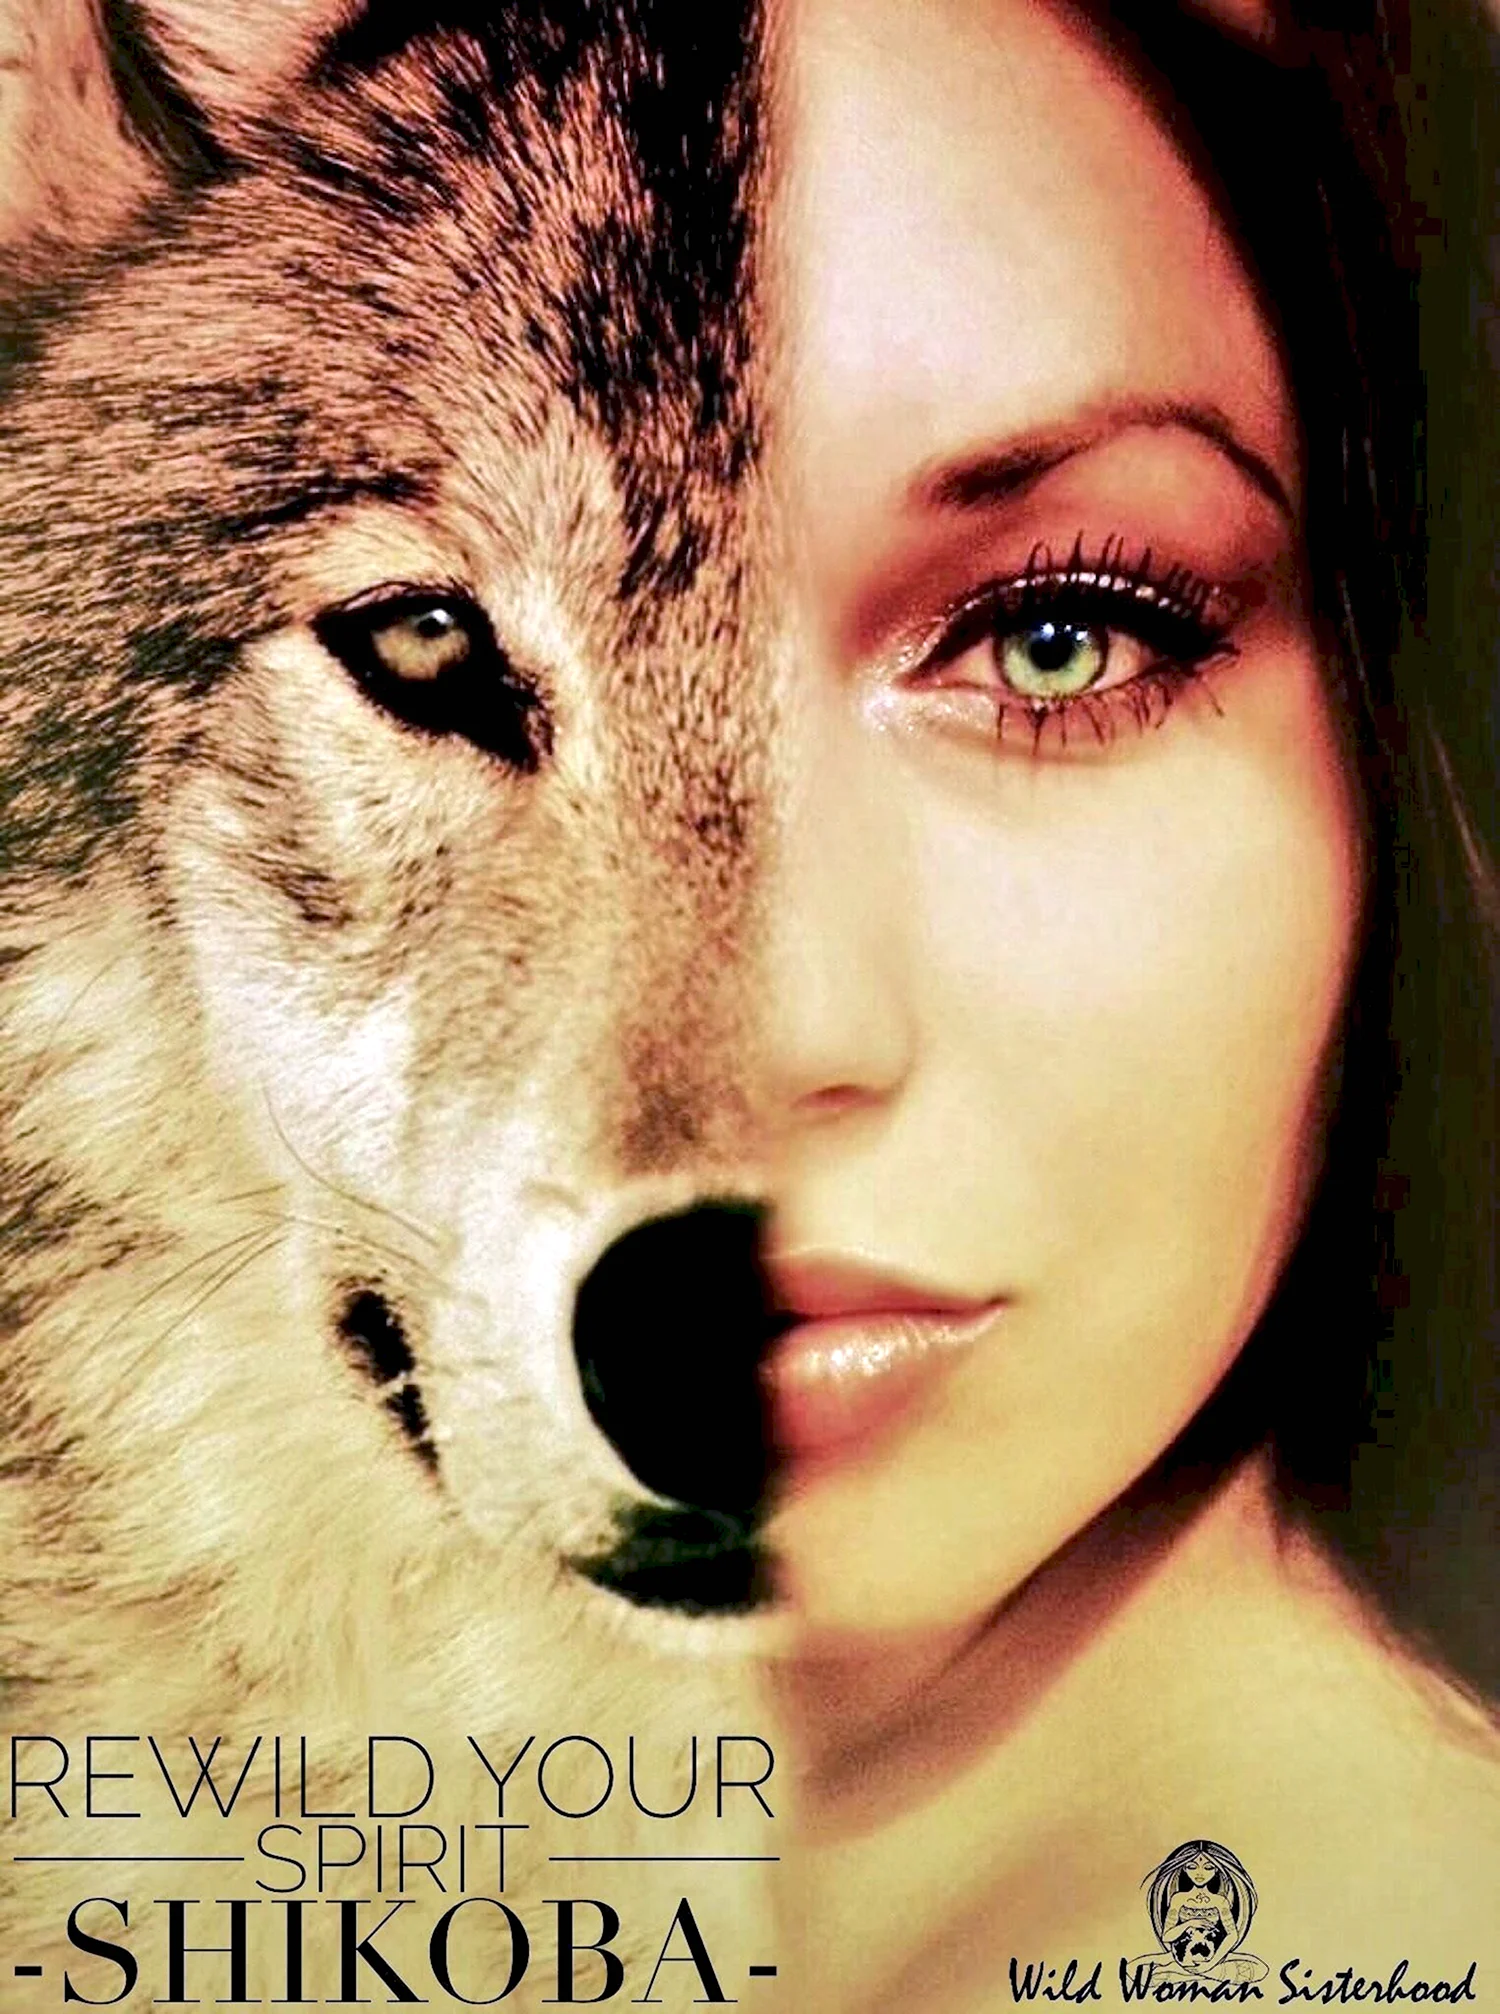 Волчица и женщина